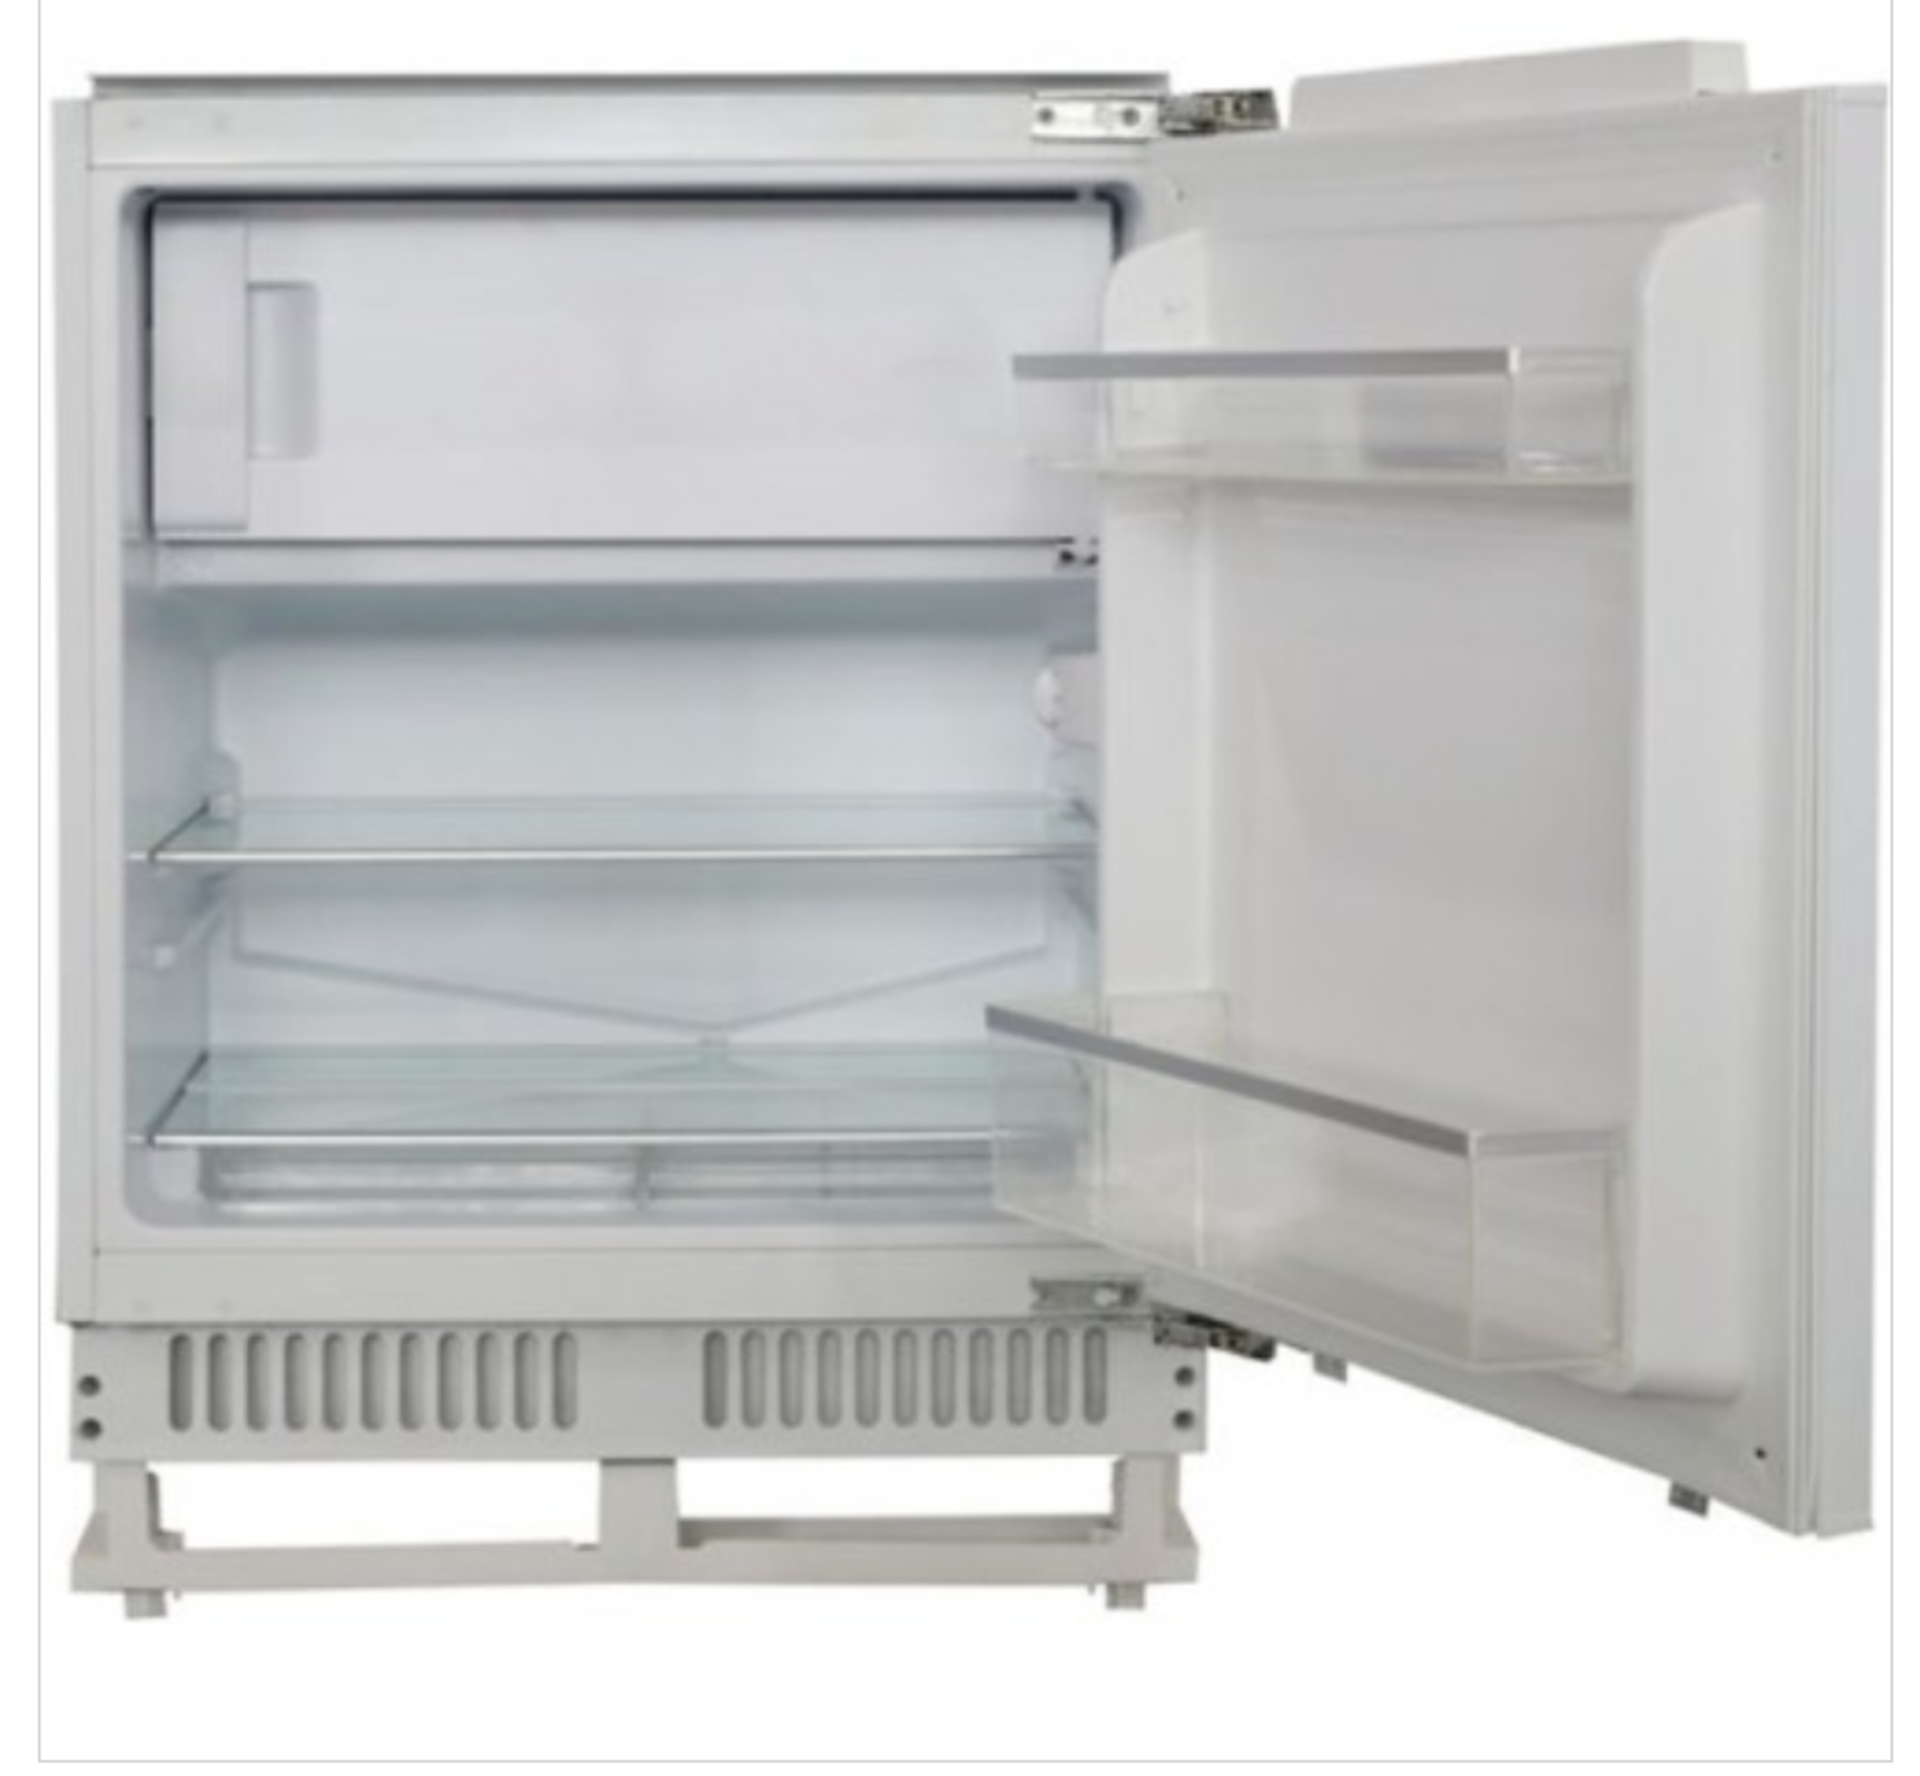 (E231) New Prima Integrated Under Counter Fridge with Ice Box - White (LPR132A1). RRP £351.00.